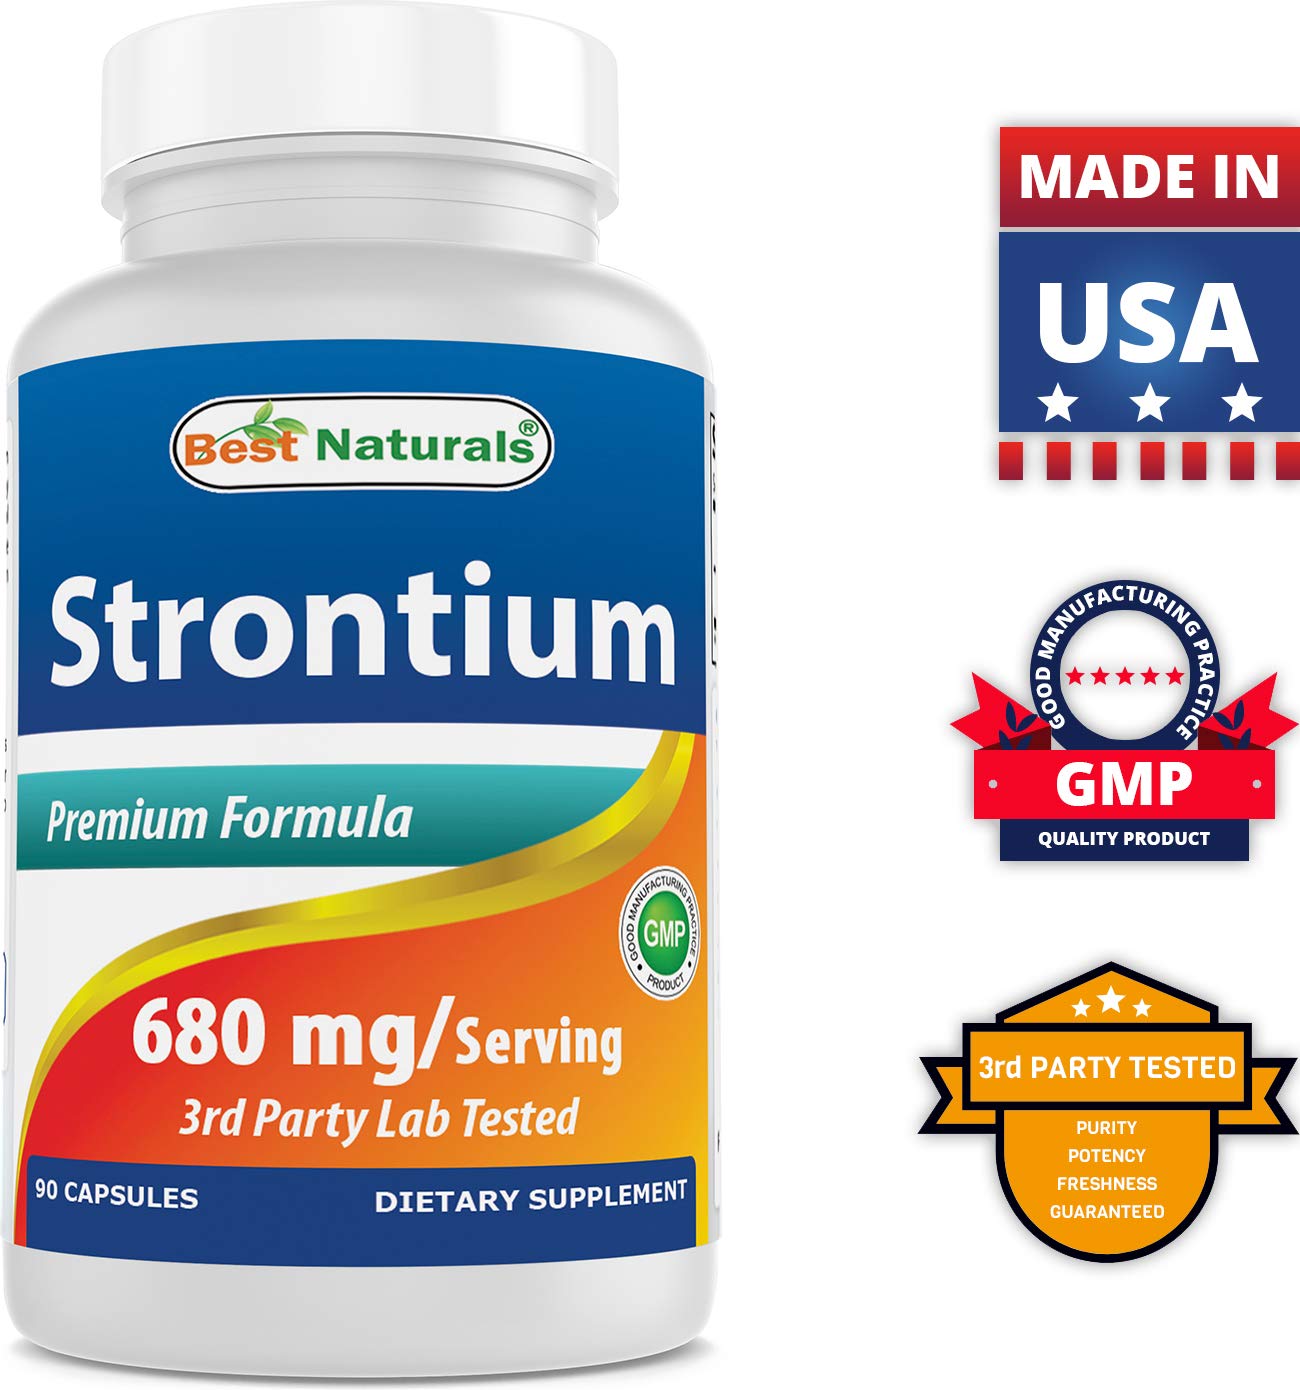 Best Naturals Strontium Bone Building Formula 680mg/serving 90 Capsules